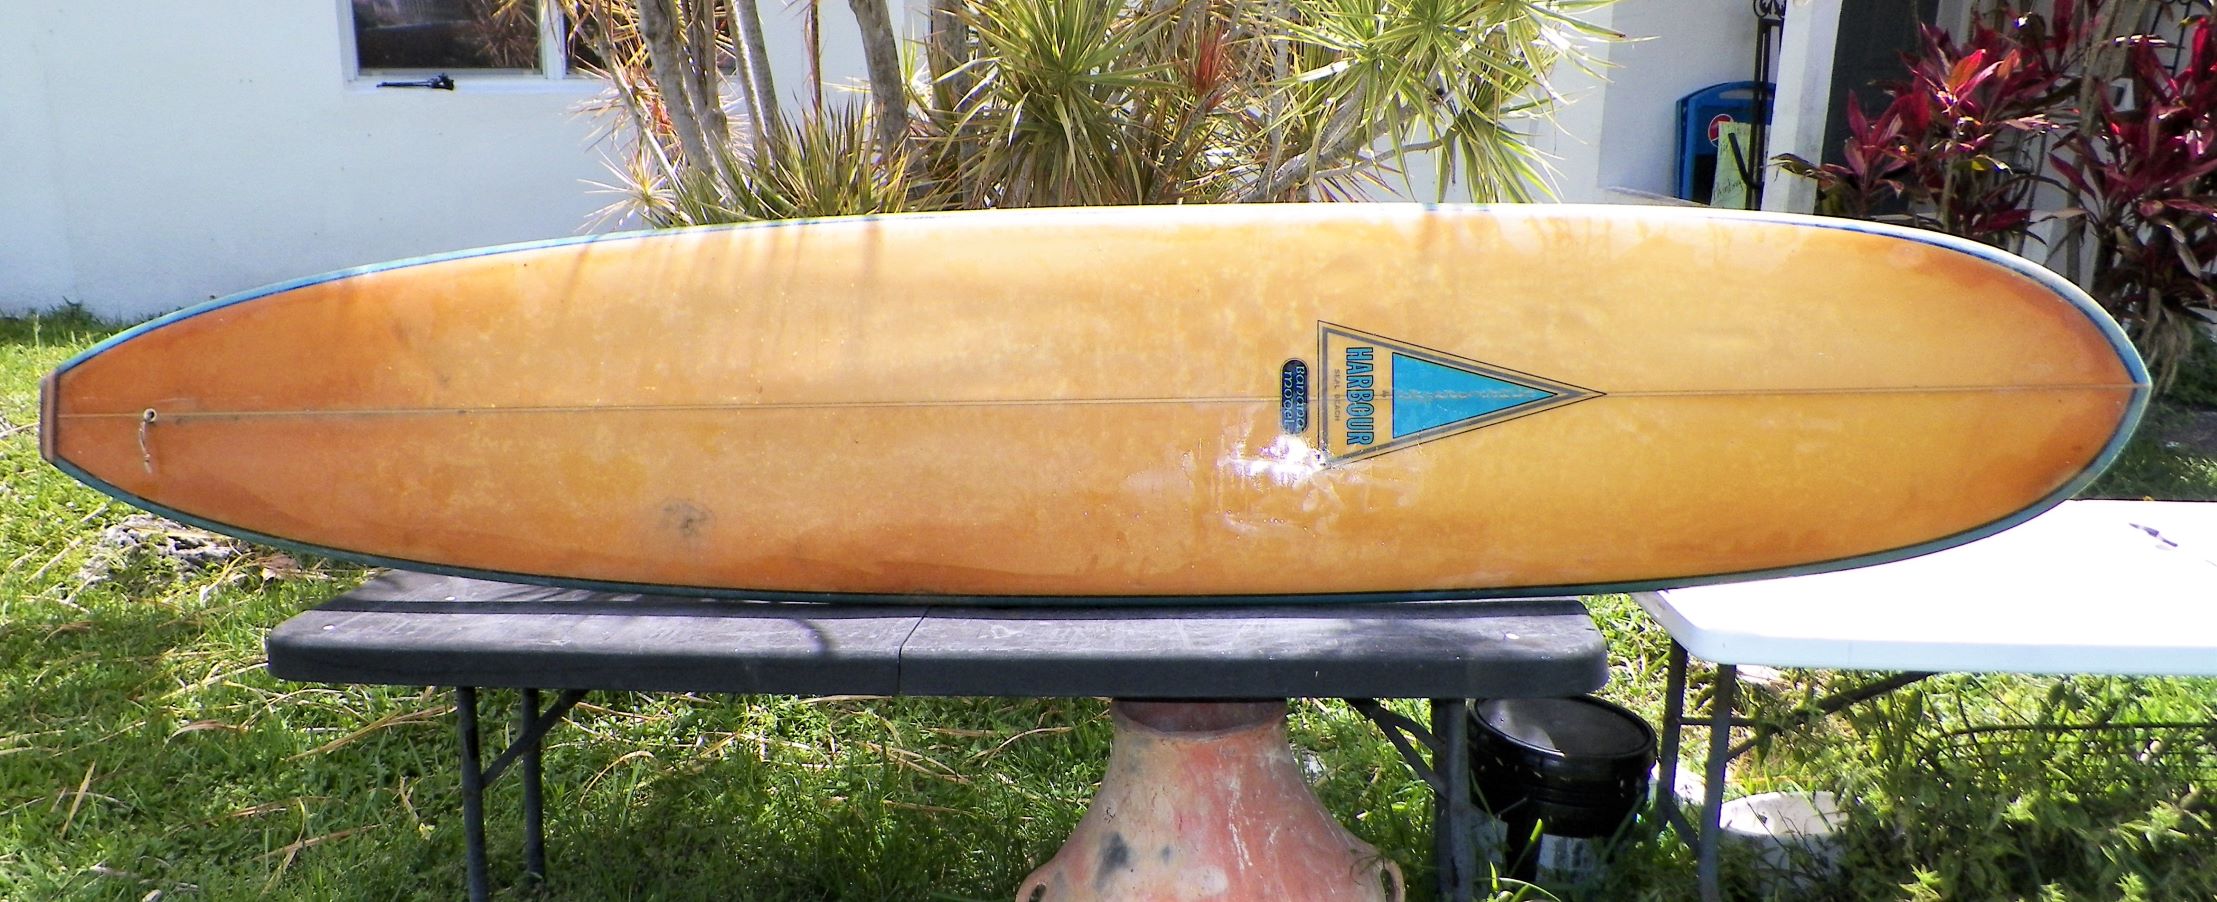 SPORT SURFBOARD HARBOR SEAL BEACH 10 2 BANANA MODEL 1AA.JPG